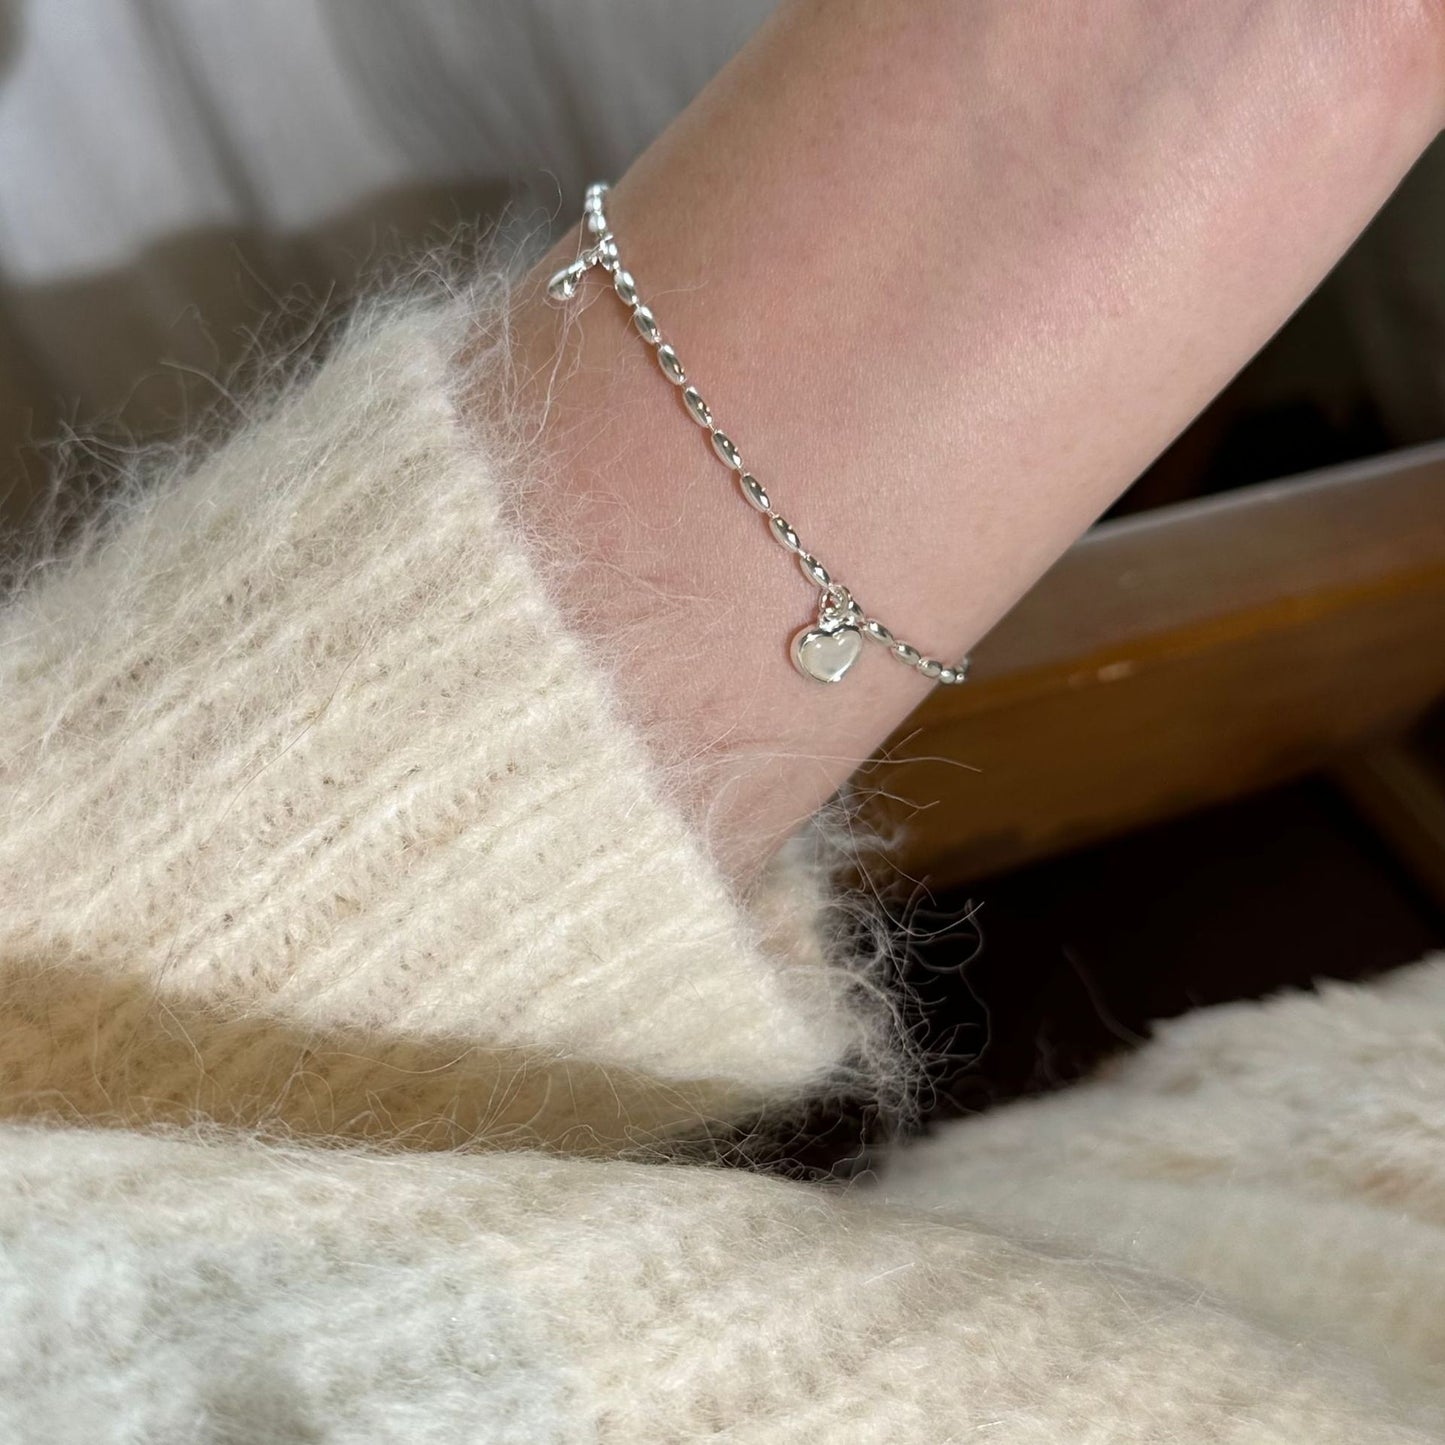 Silver Rice Grain Chain Bracelet with Heart Moonstone Pendant